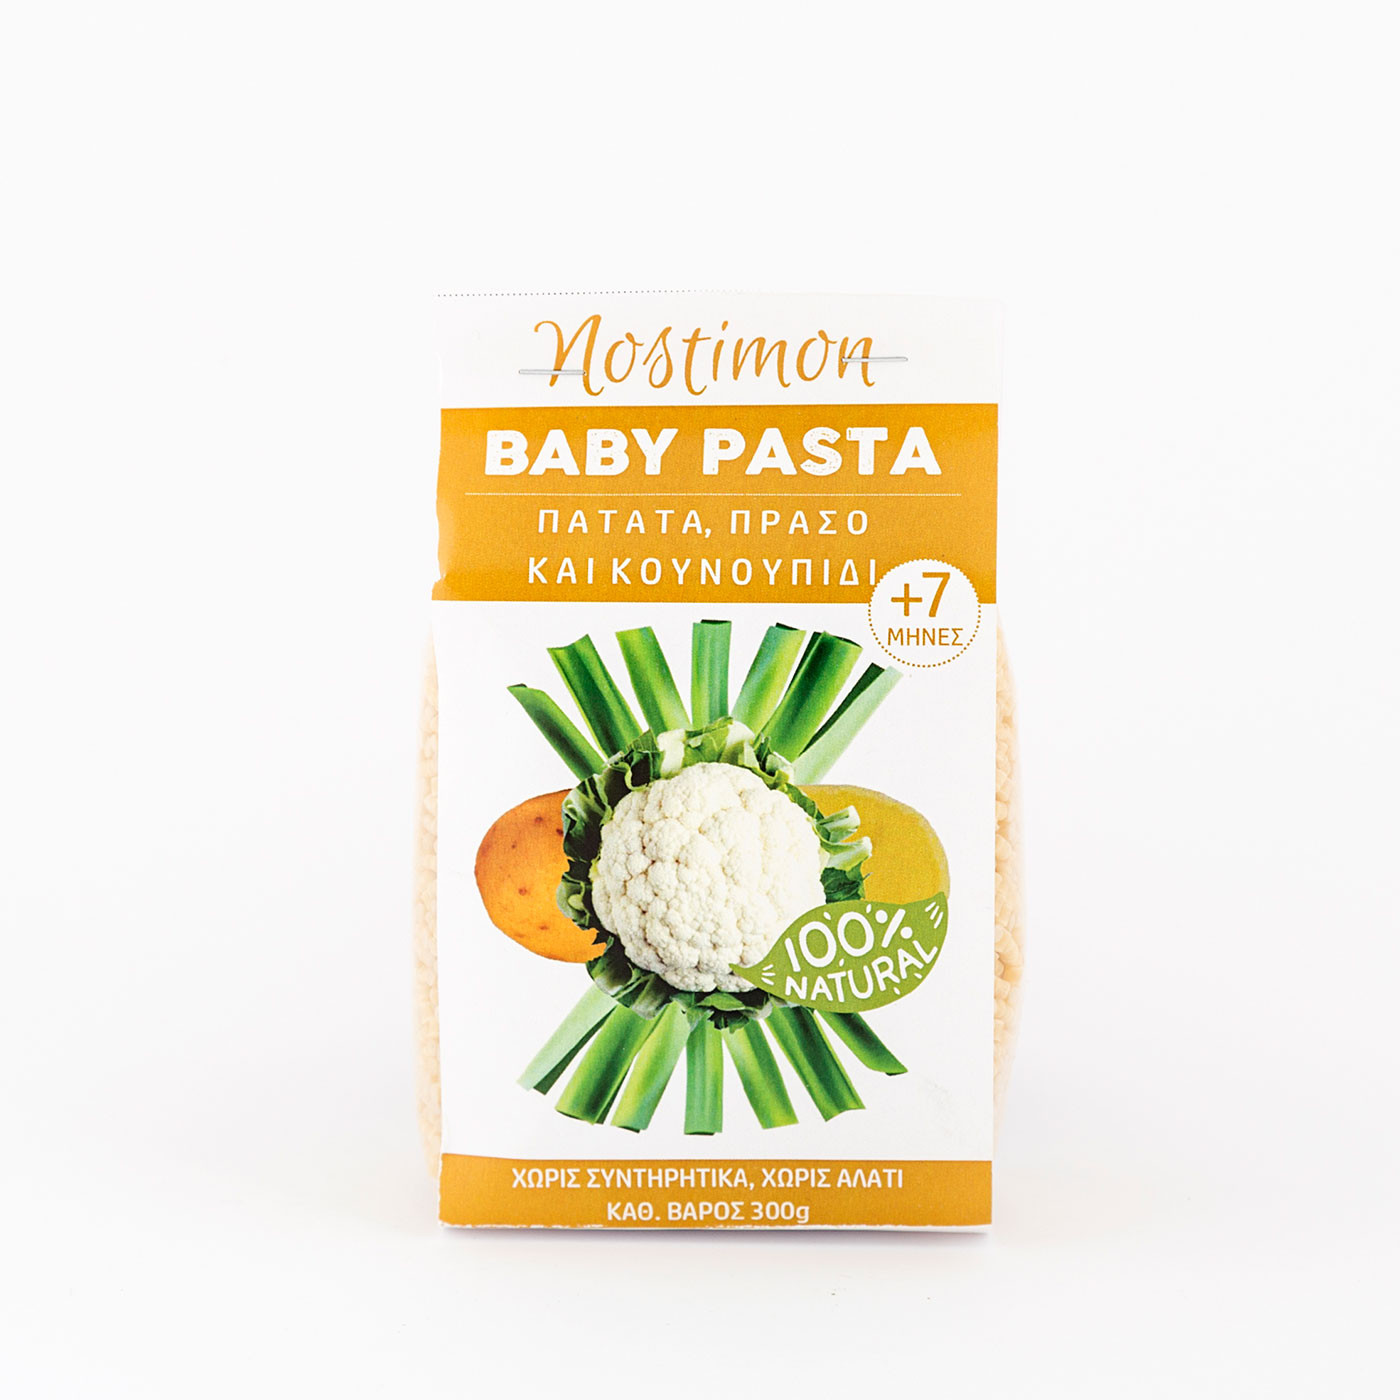 Baby Pasta πατάτα, πράσο και κουνουπίδι "nostimon" 300 g